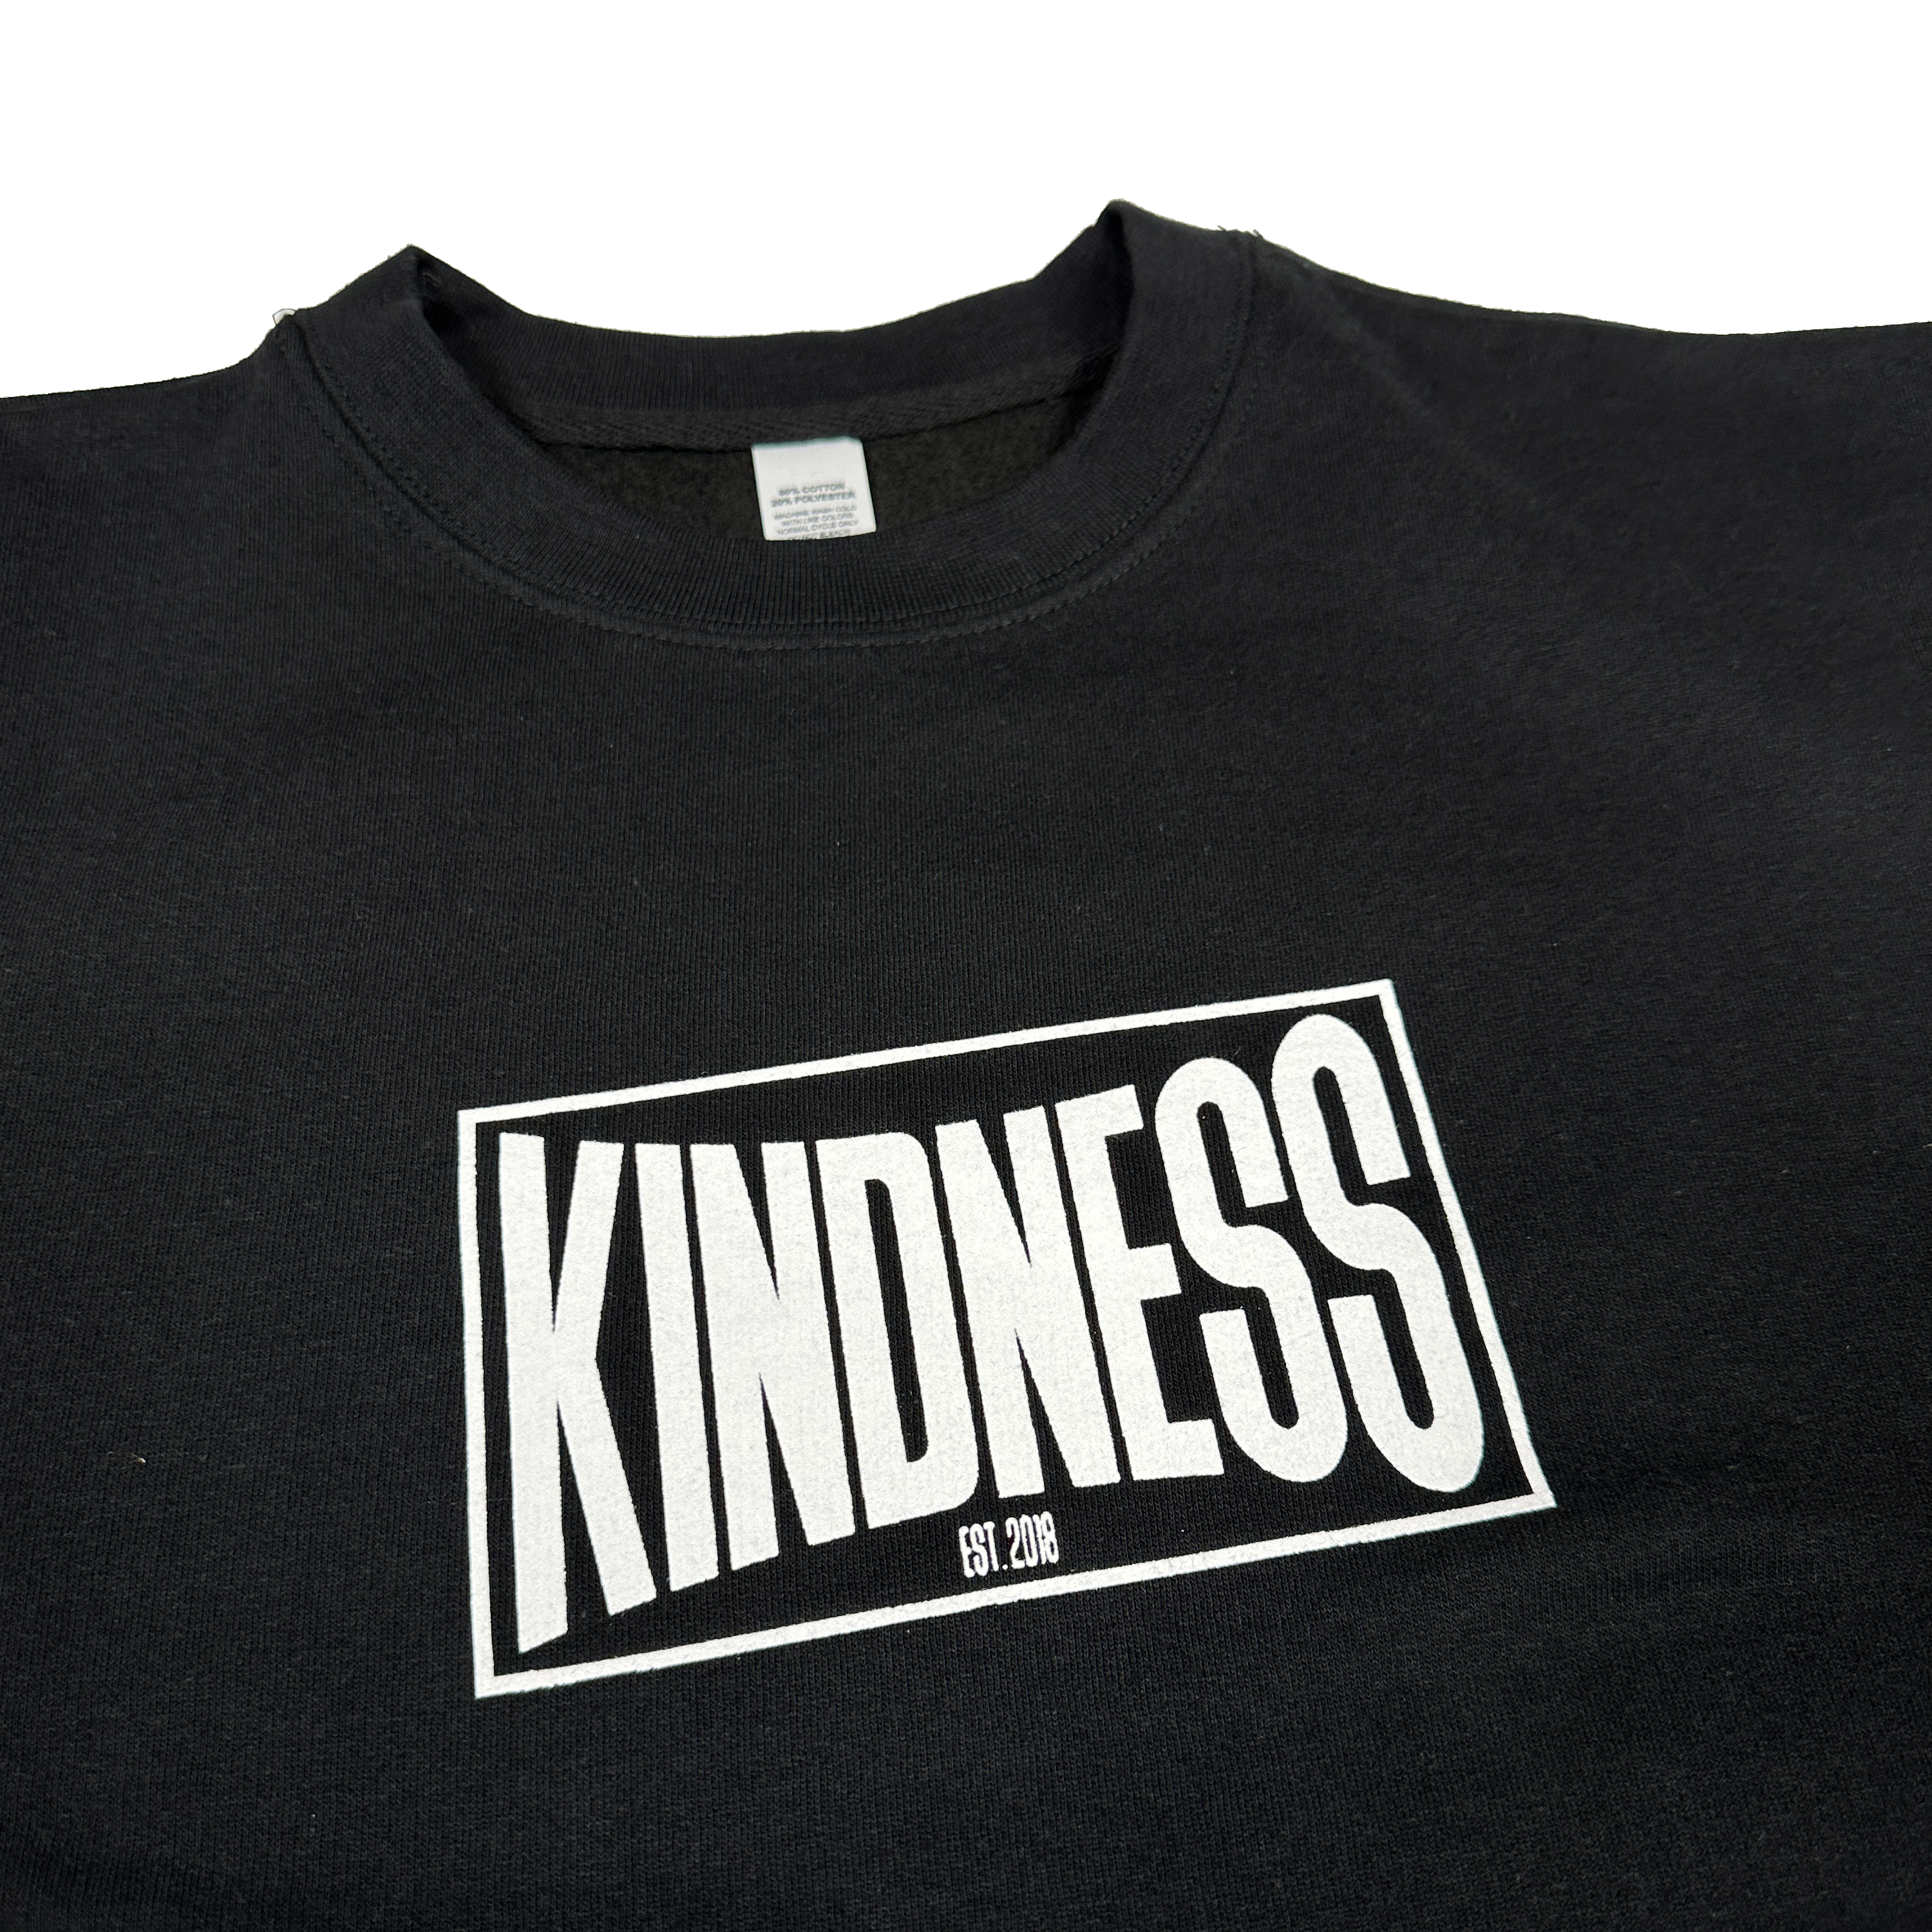 SALE - The Kindness Outlast Mid Weight Crewneck Sweatshirt